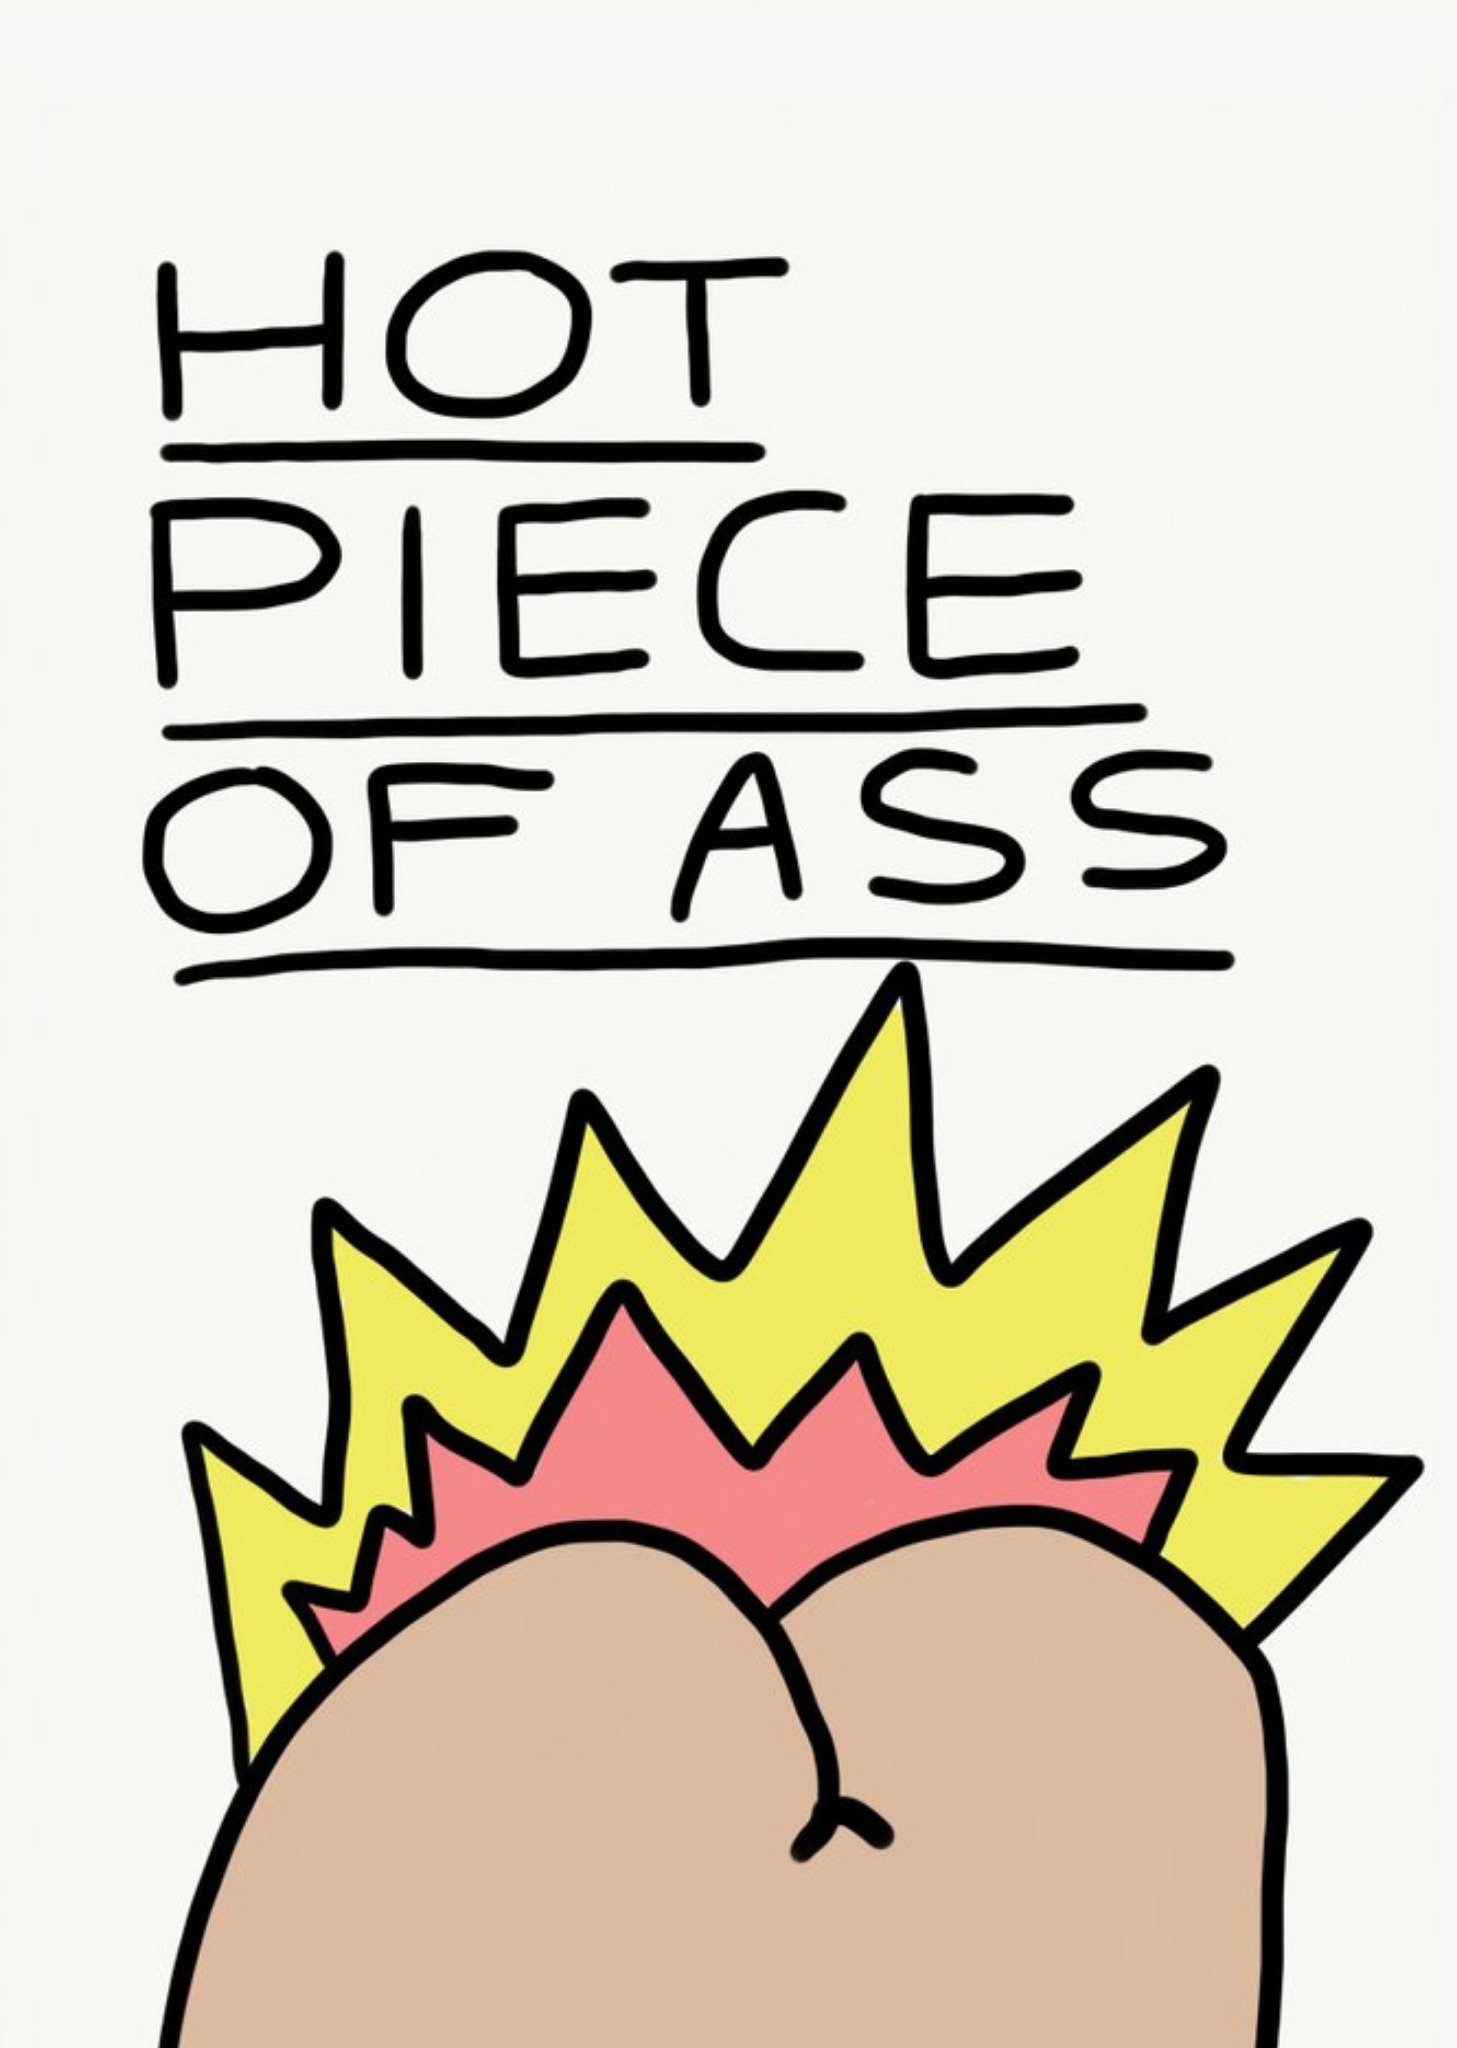 Jolly Awesome Hot Piece Of Ass Card Ecard